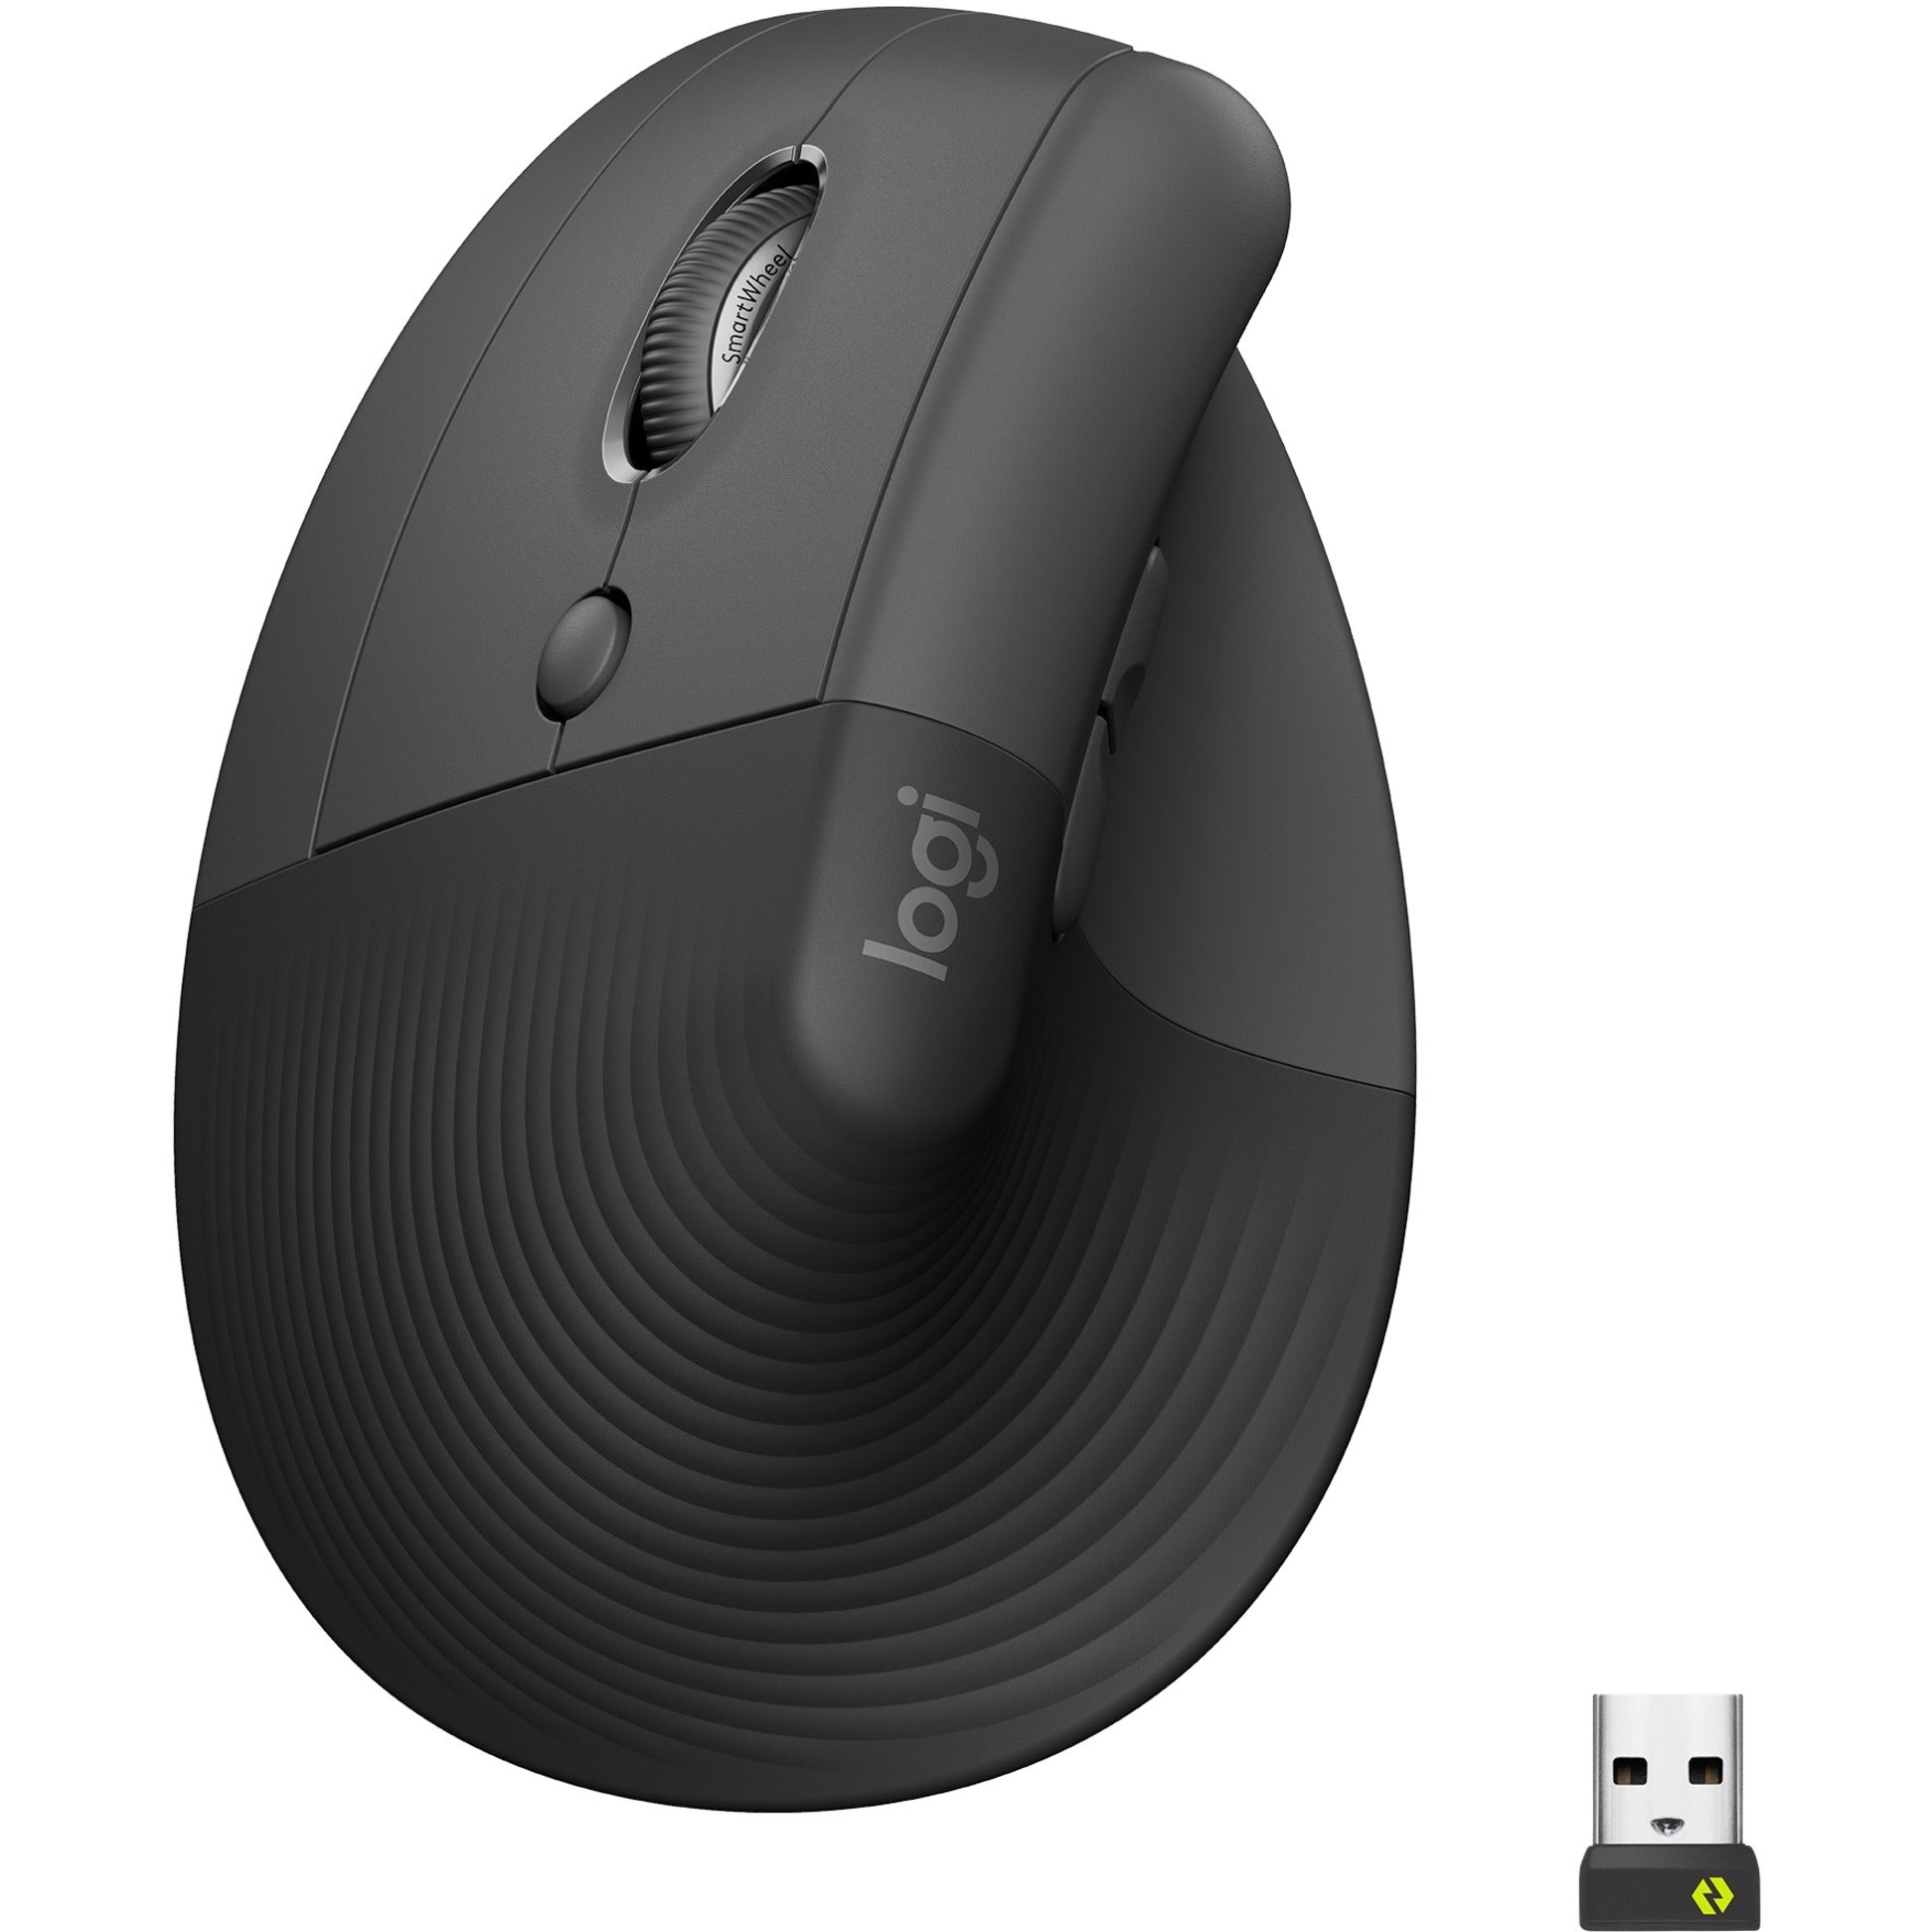 Logitech 910-006467 Lift Left Vertical Ergonomic Mouse (Graphite), Small/Medium Hand Size, 6 Buttons, 4000 dpi